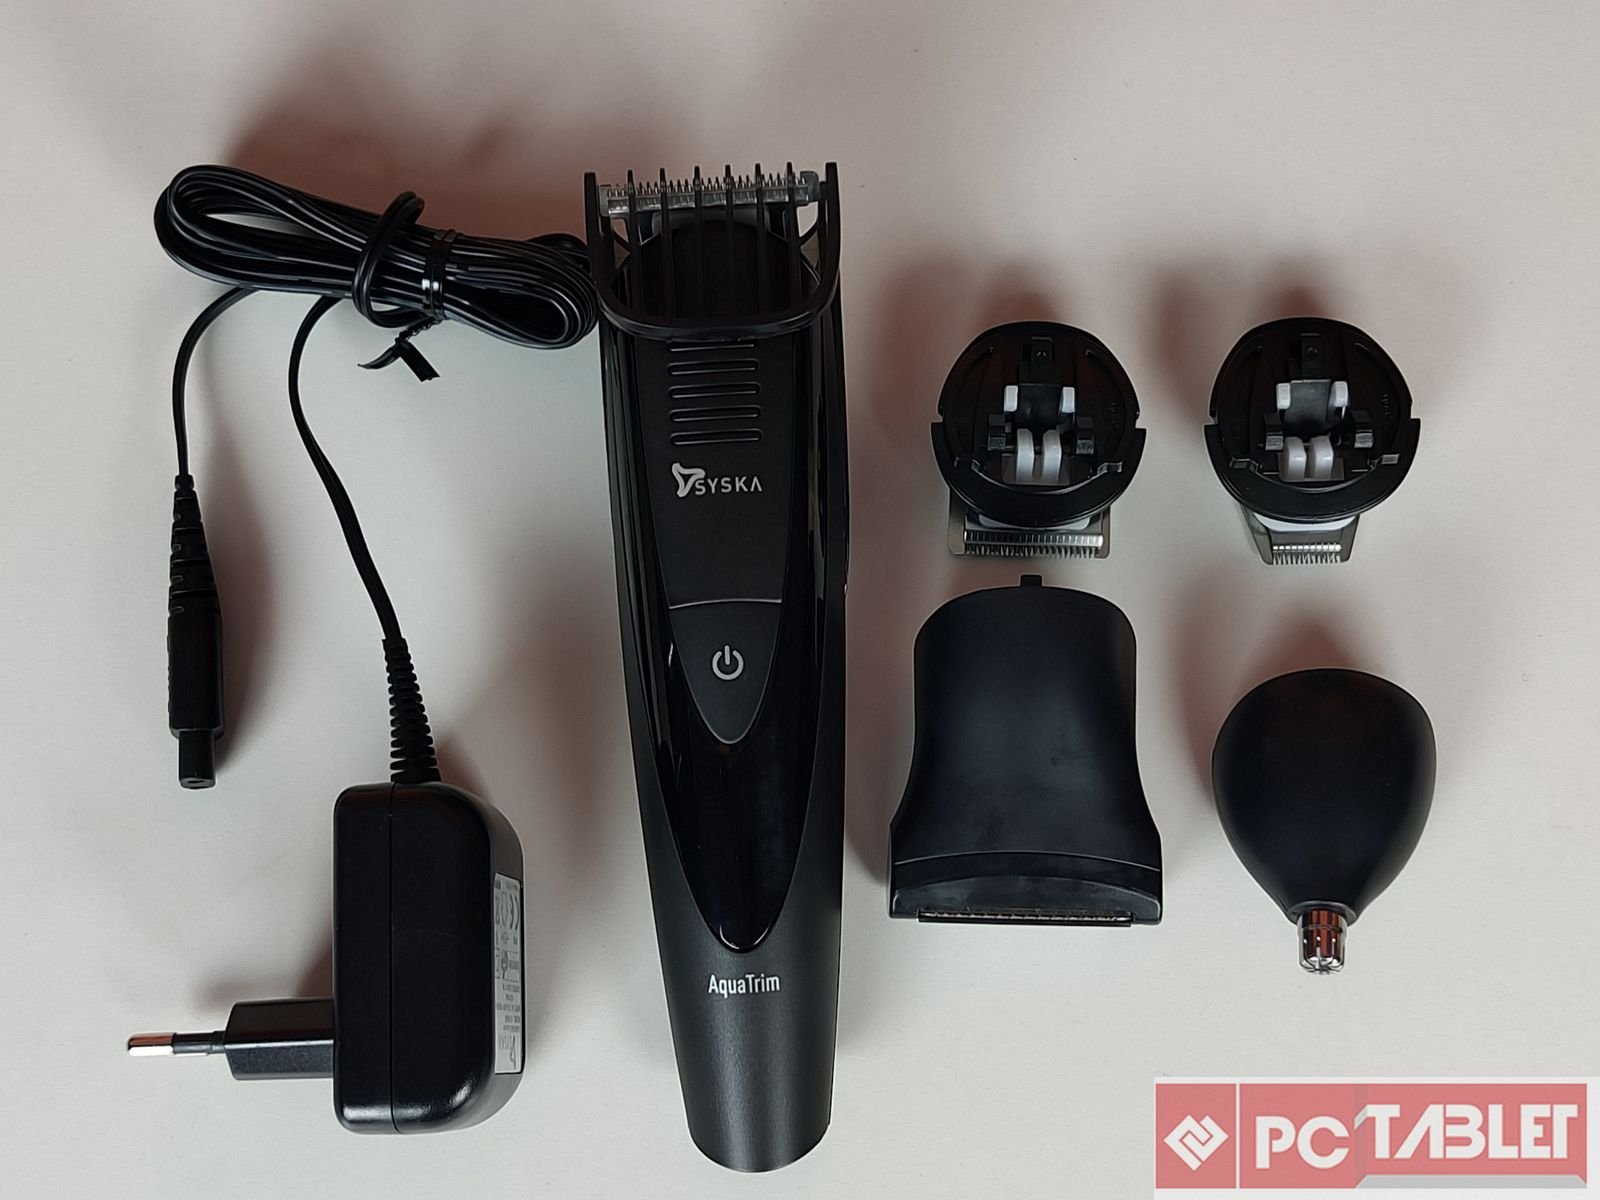 Syska HT4000K Aqua Pro Grooming kit Review 1